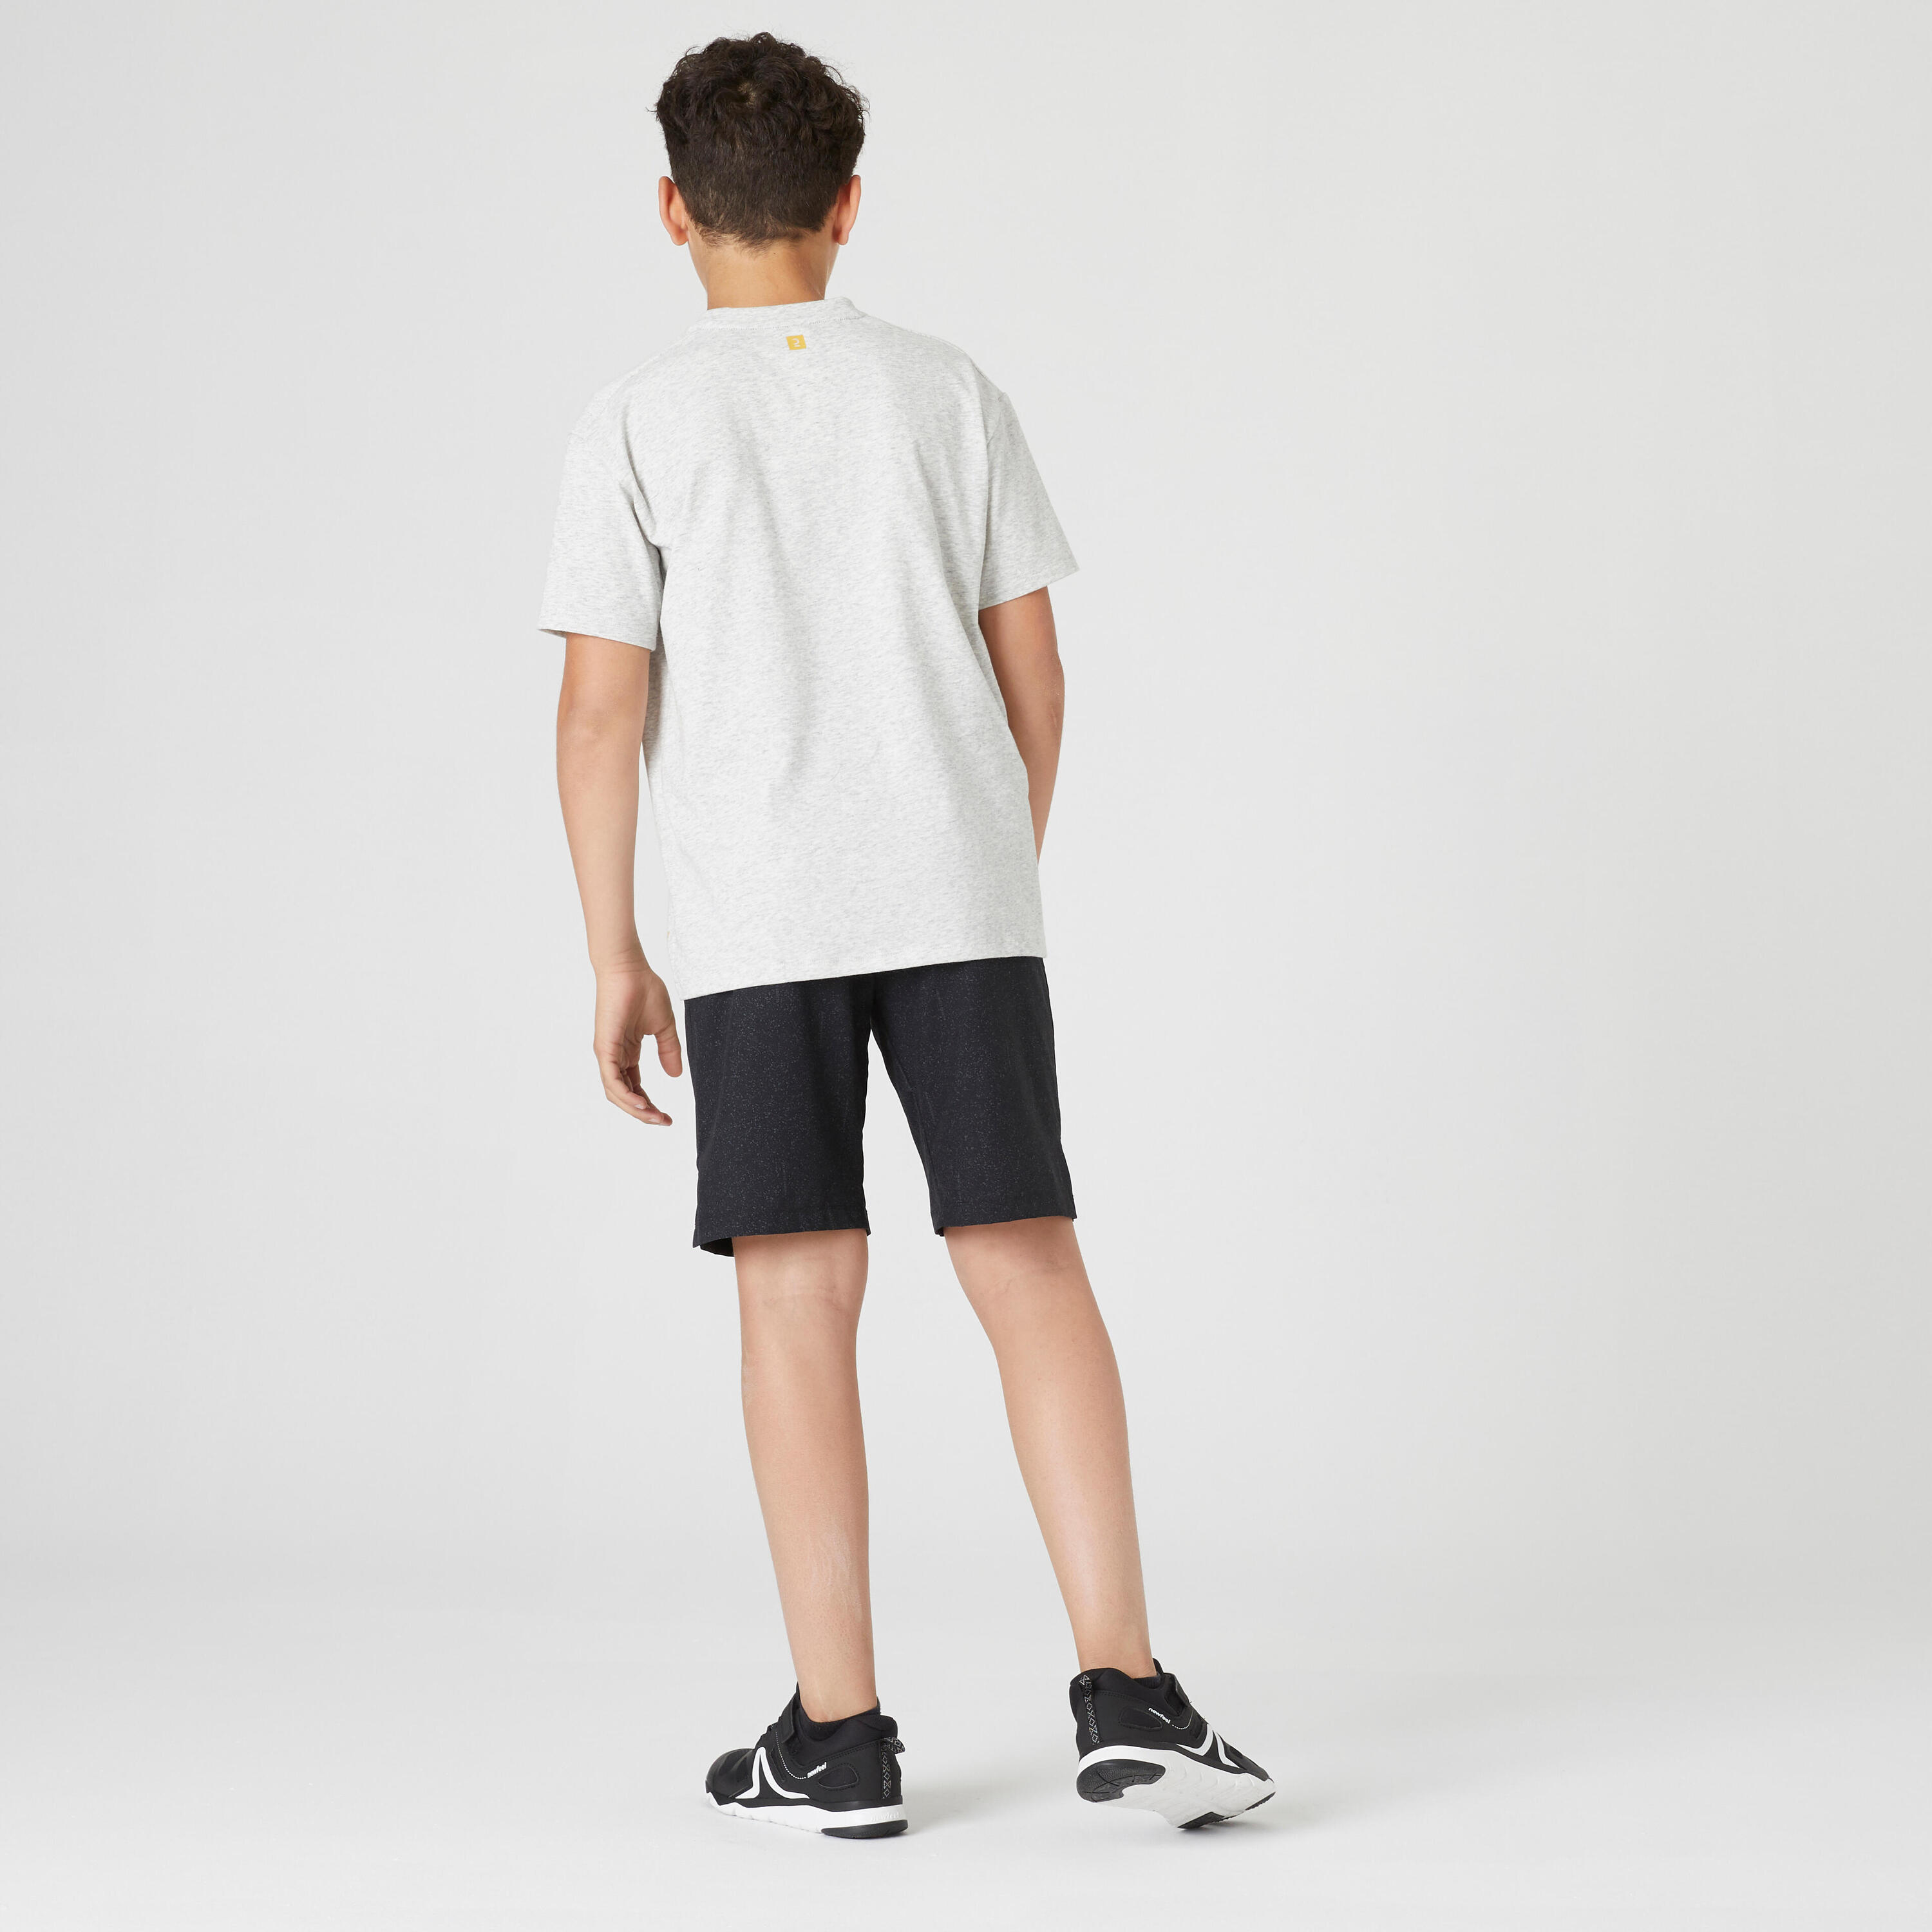 Kids' Breathable Cotton T-Shirt 500 - Light Grey 4/6